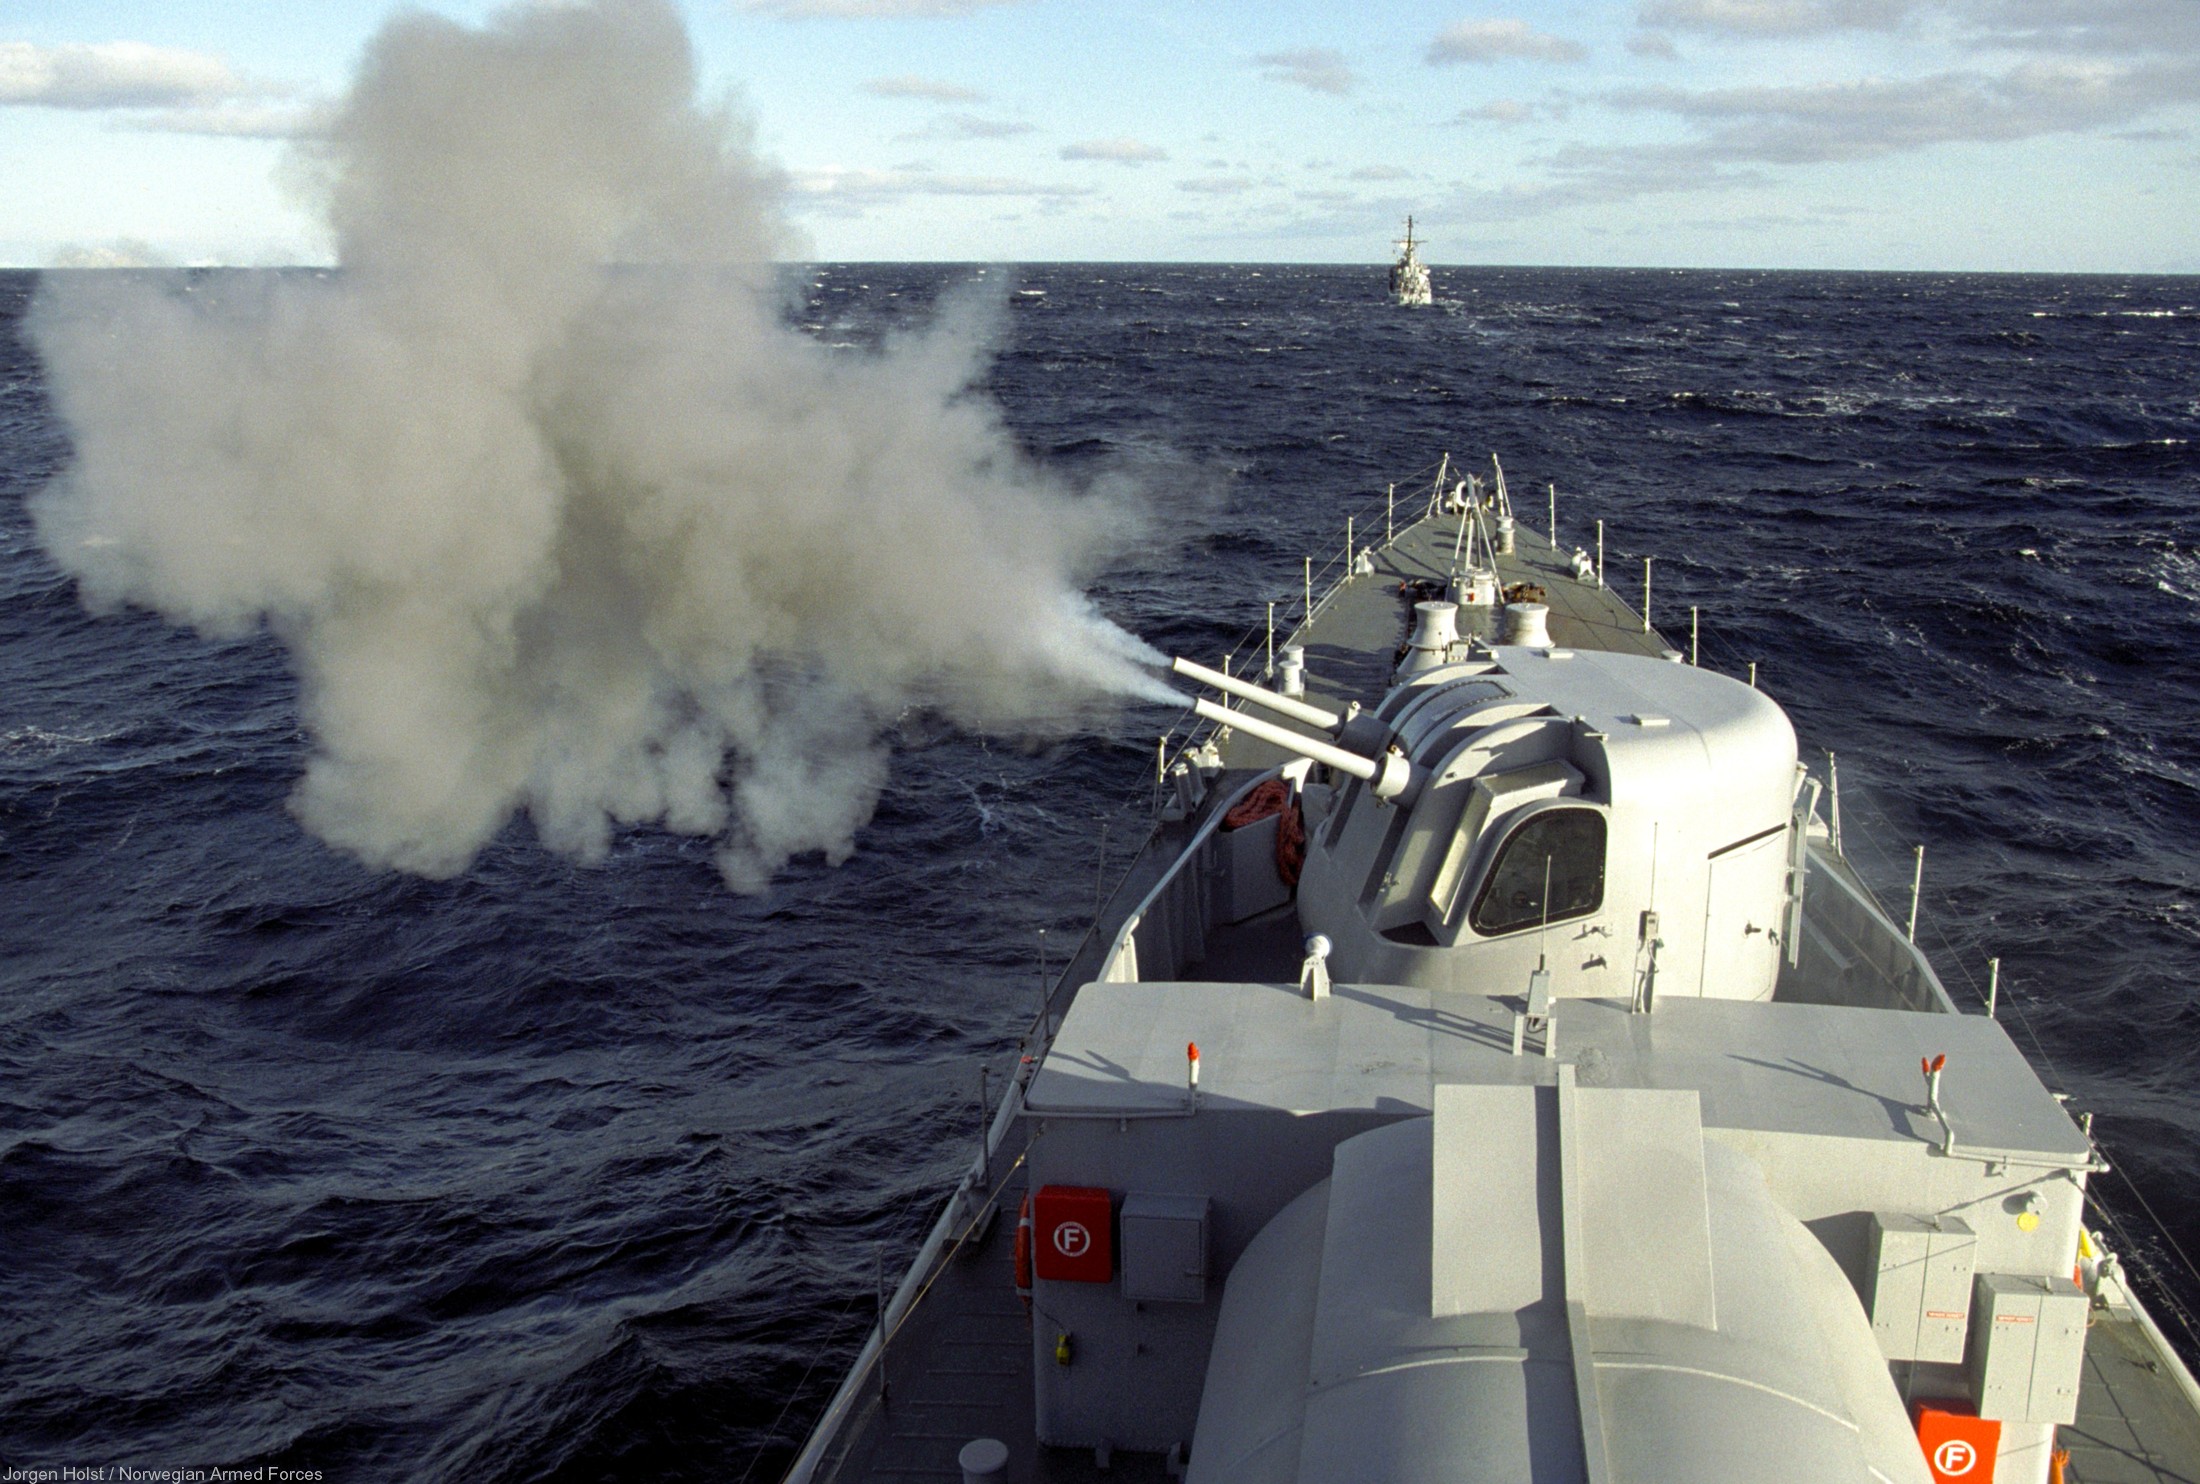 oslo class frigate royal norwegian navy 76mm 3-inches twin gun sjoforsvaret 02x